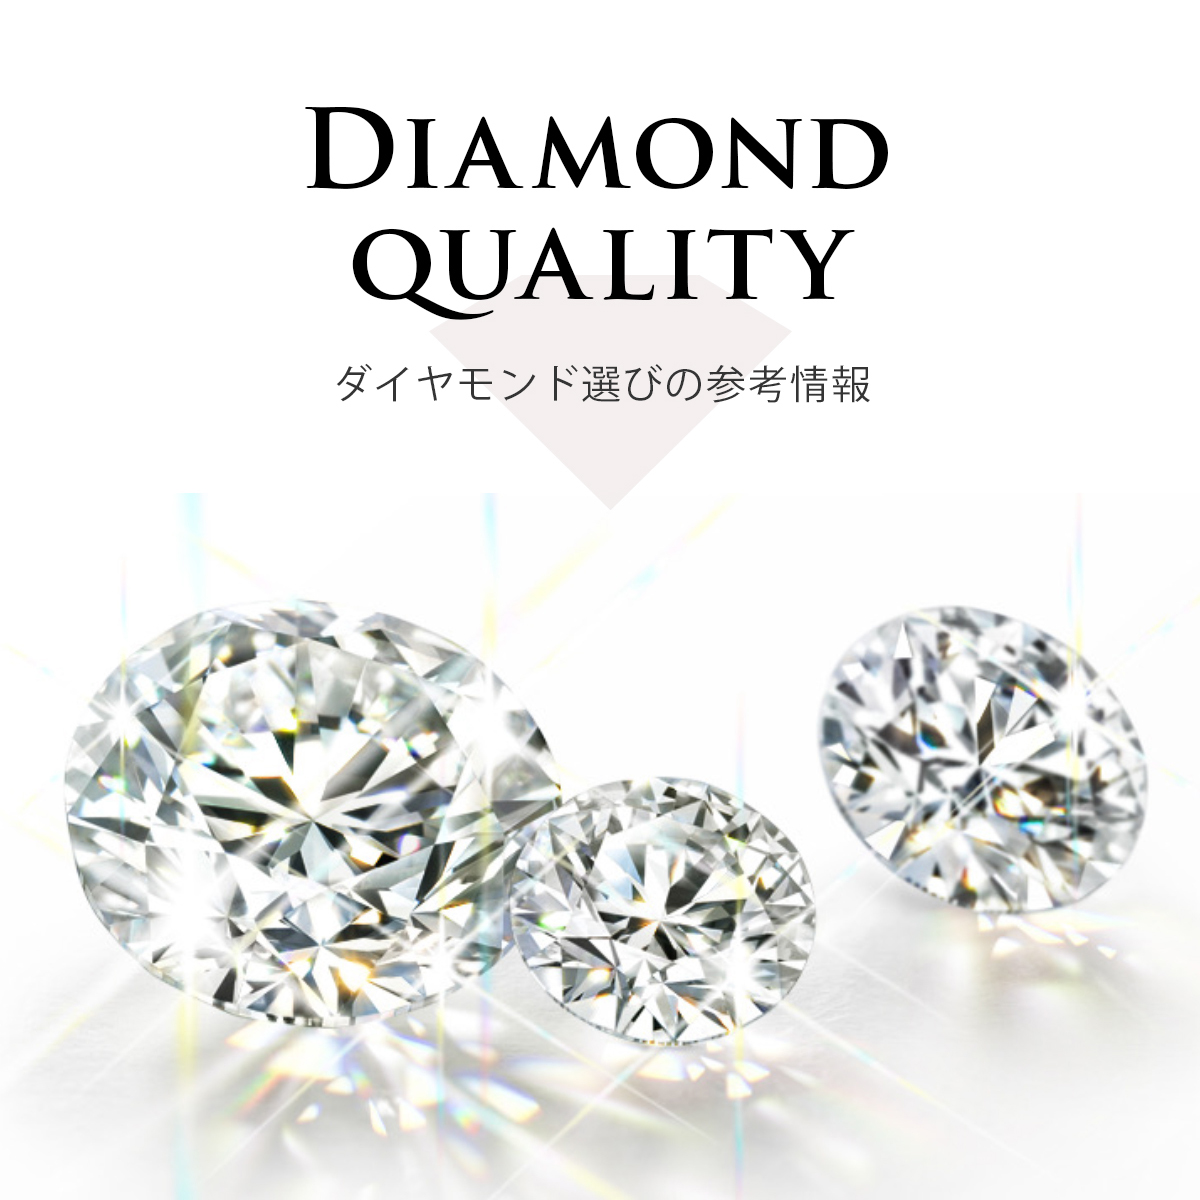 DIAMOND QUALITY ダイヤモンド選びの参考情報